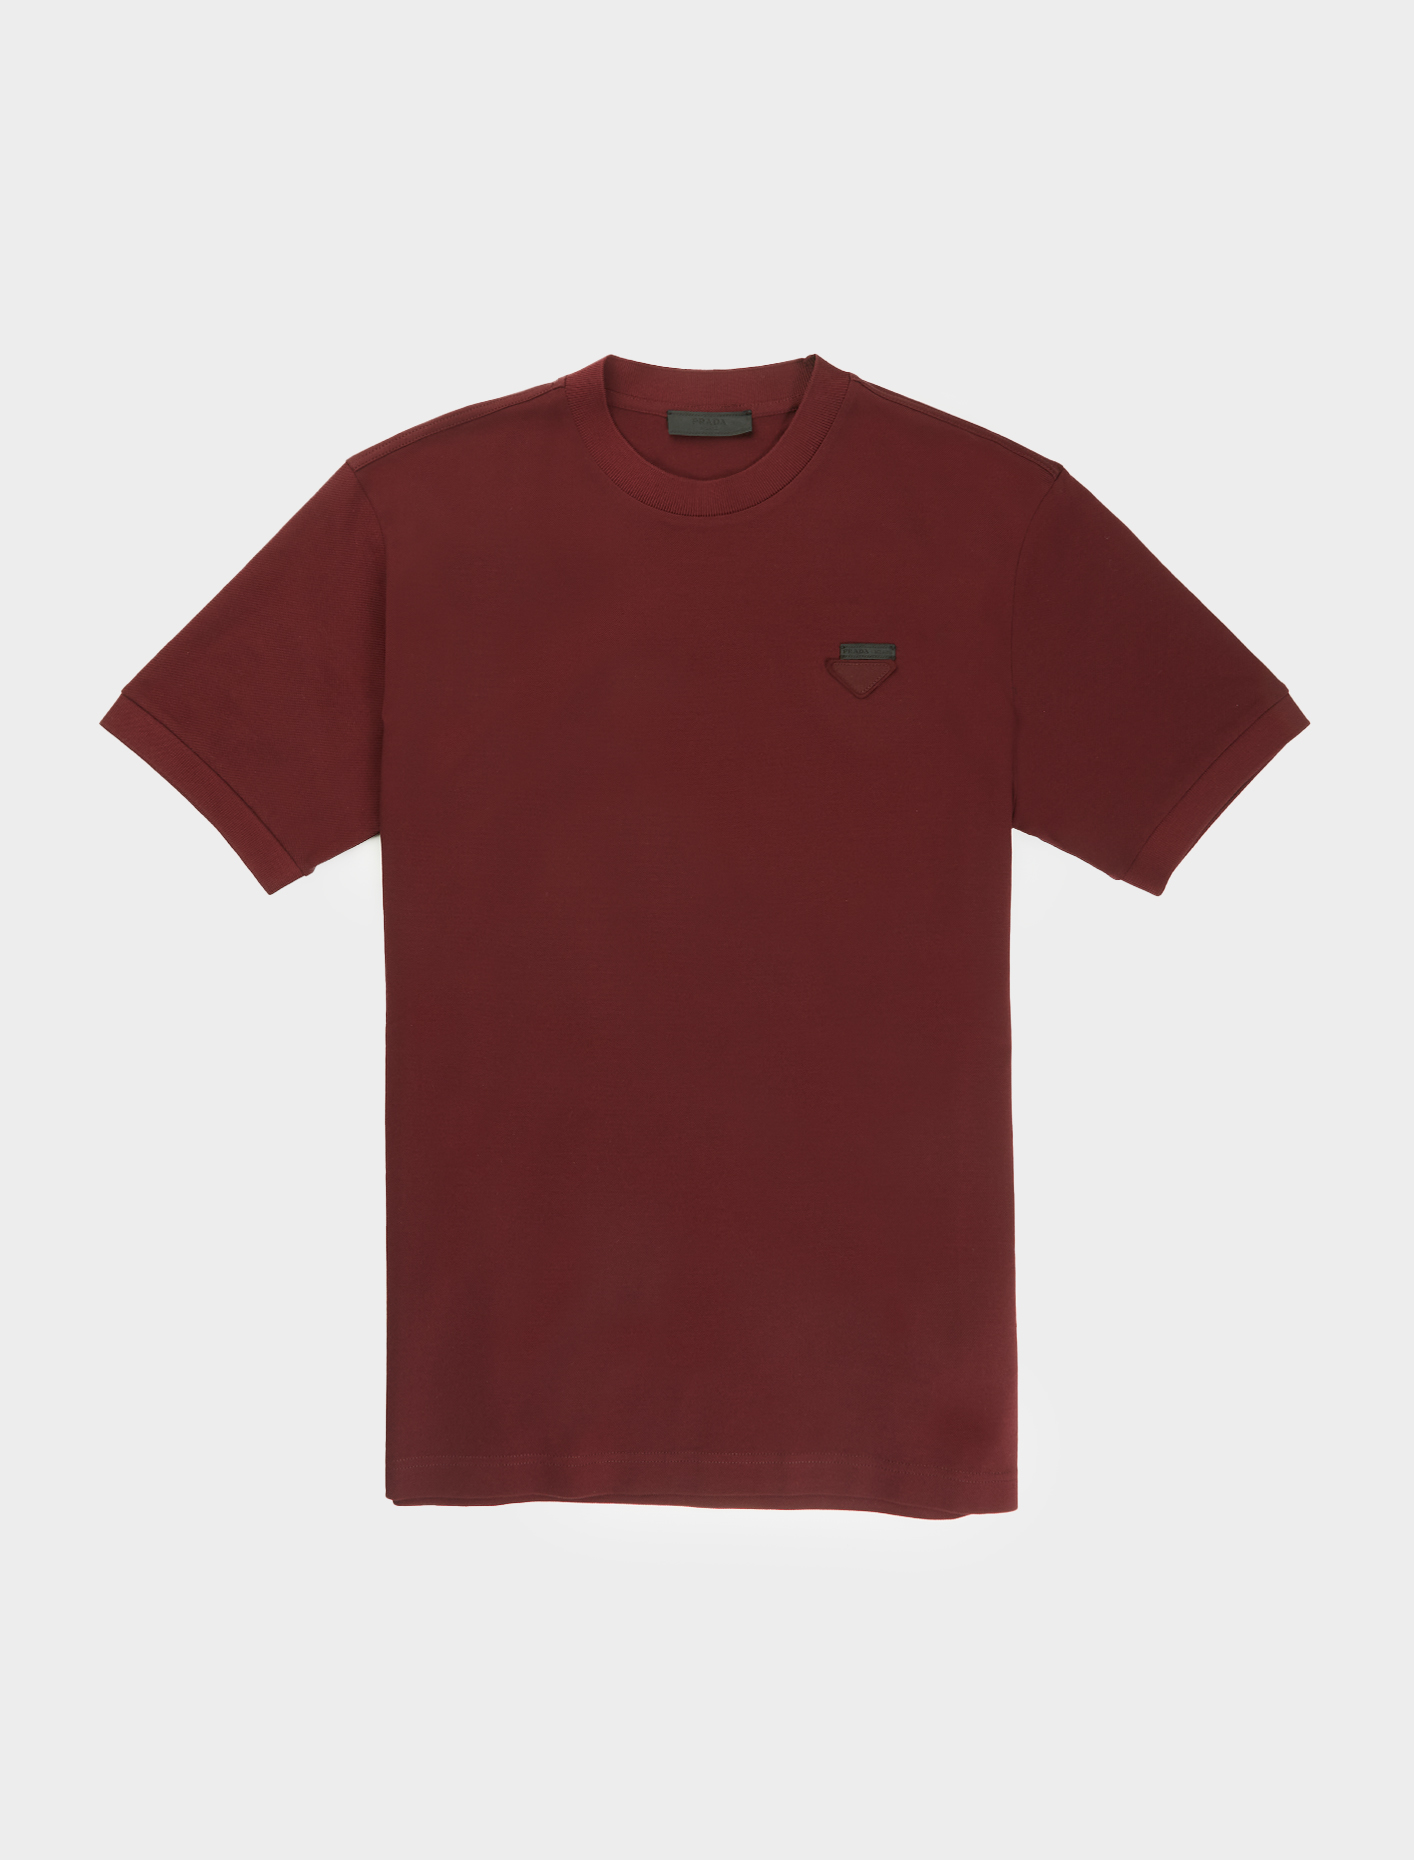 Prada Piqué T-Shirt in Garnet | Voo Store Berlin | Worldwide Shipping